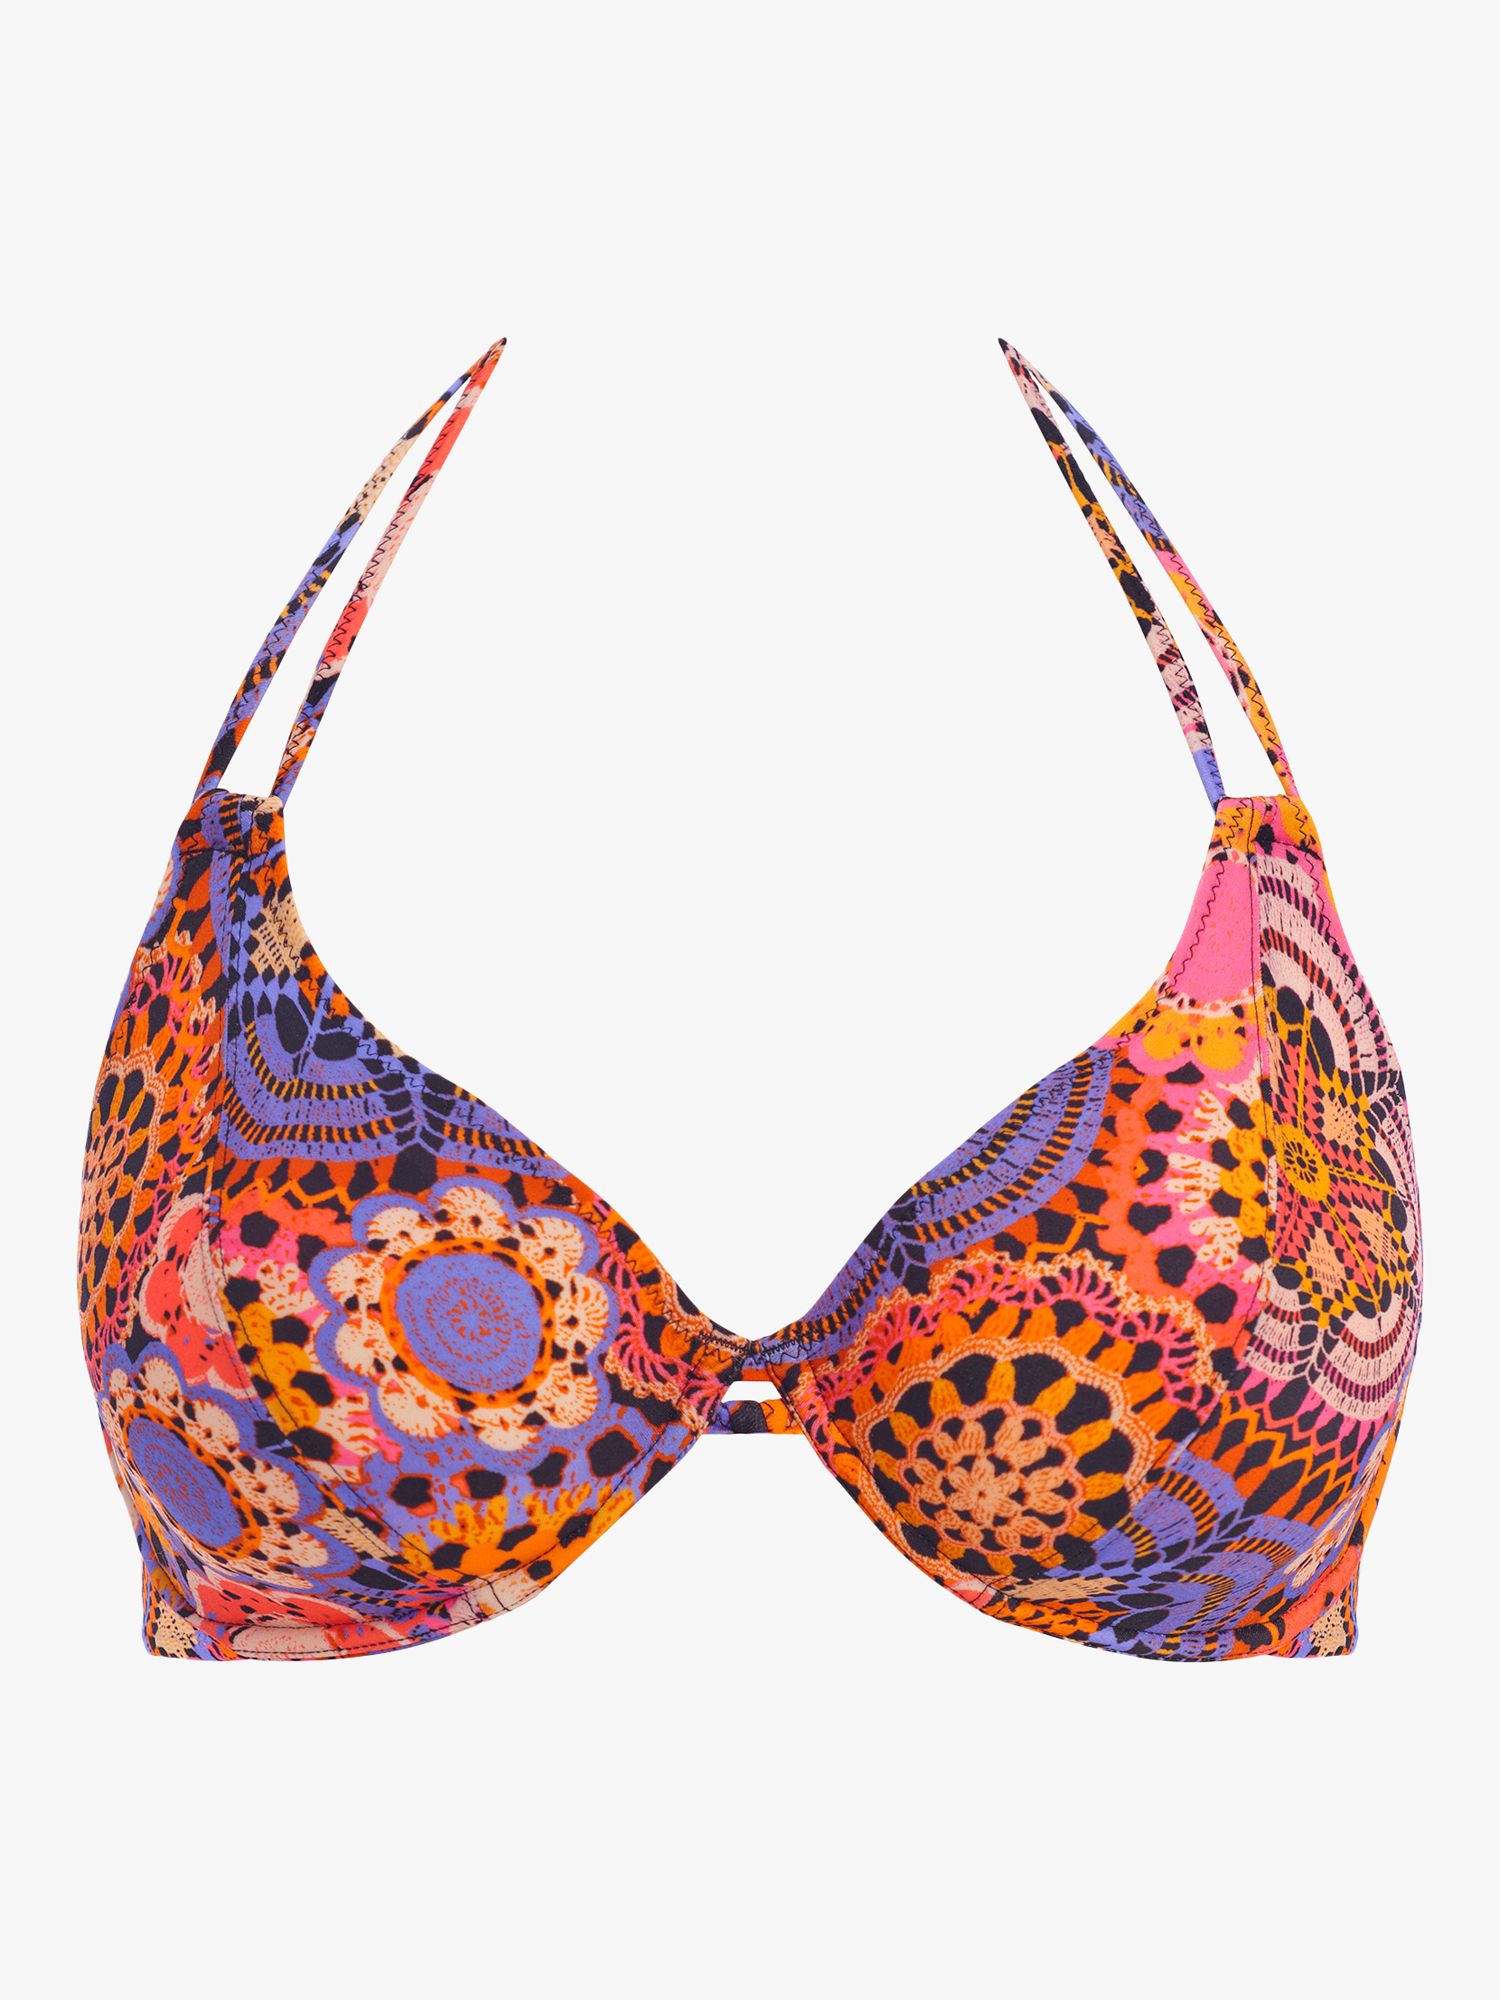 Freya San Tiago Nights Crochet Print Underwired Halter Bikini Top, Multi, 34DD